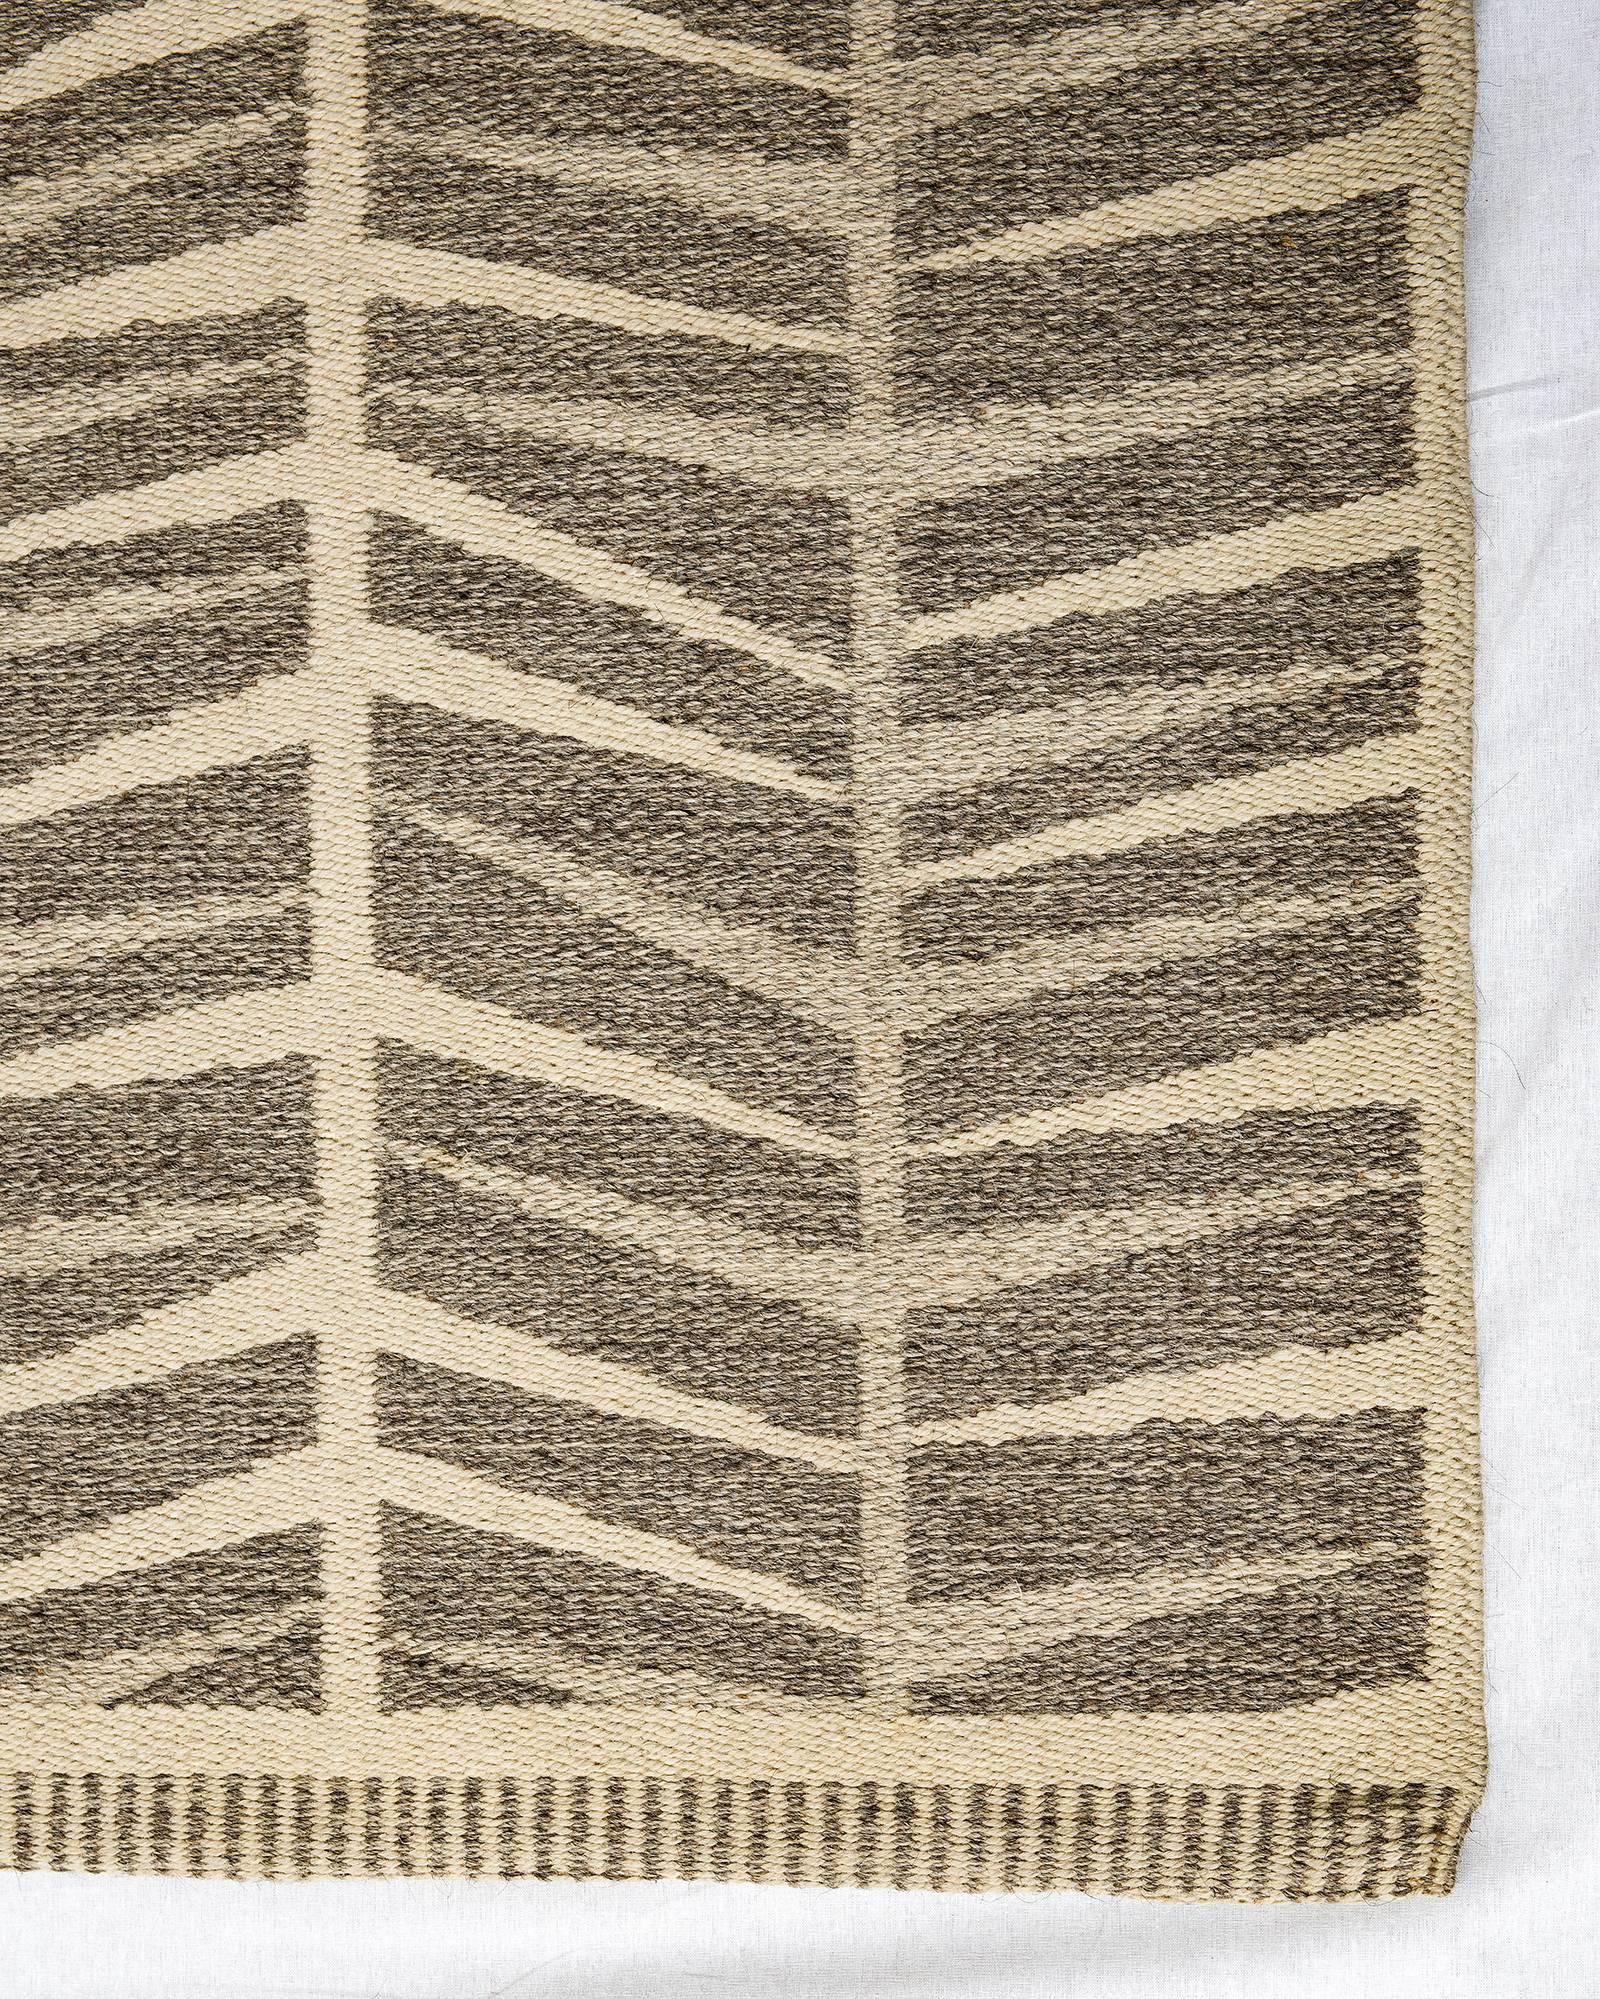 Hand-Woven Vintage Ingrid Dessau Flat-Weave Swedish Carpet